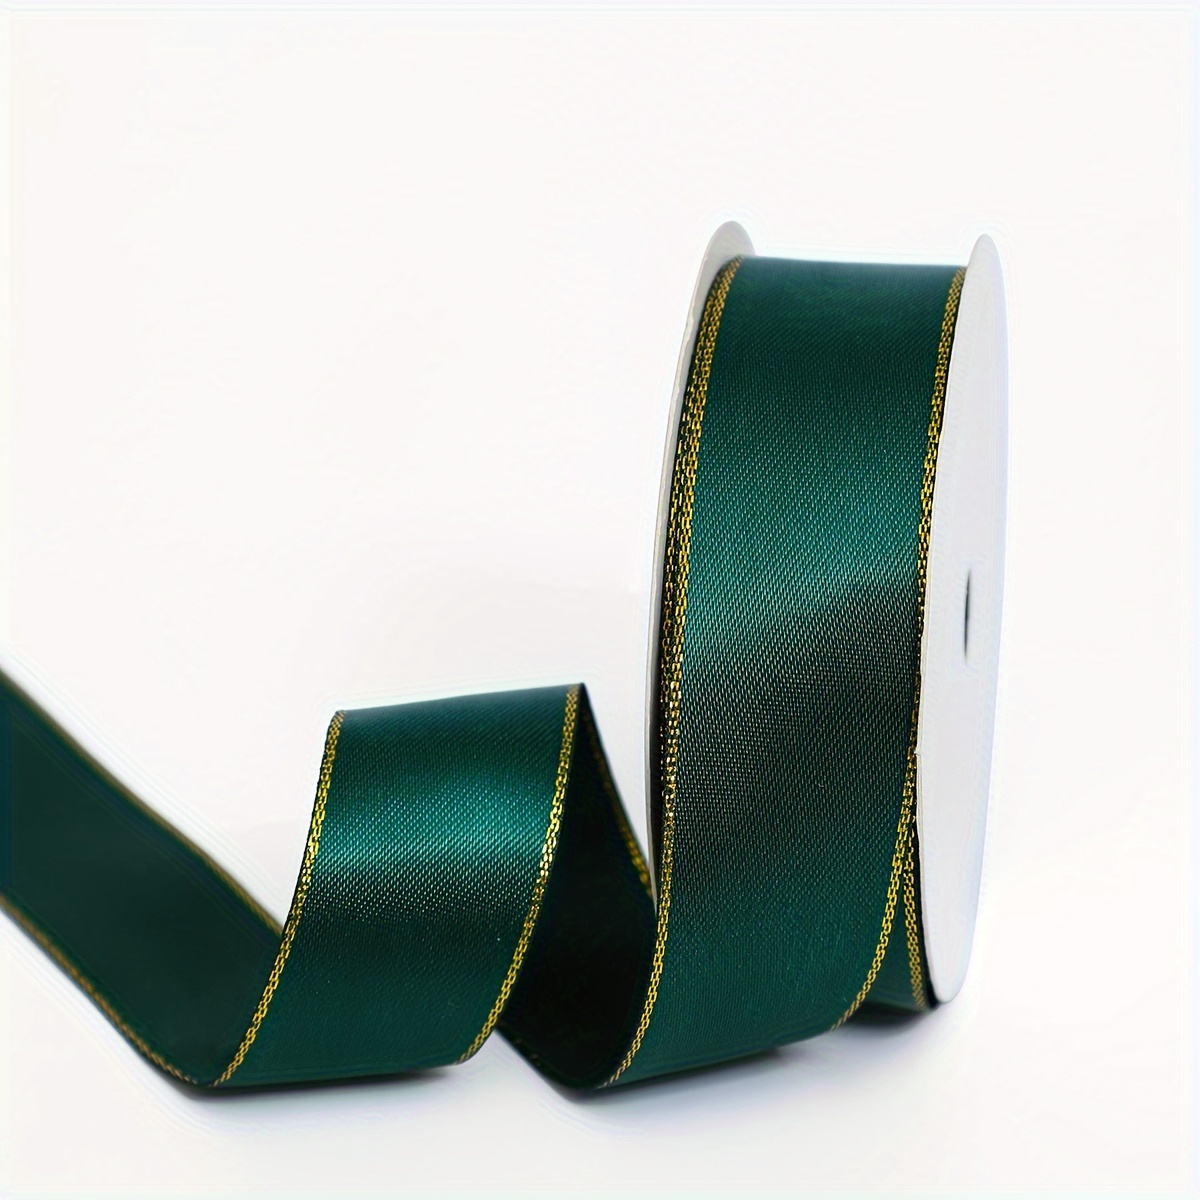 10mm Light Green Double Faced Satin Ribbon x 50 Metre Rolls!